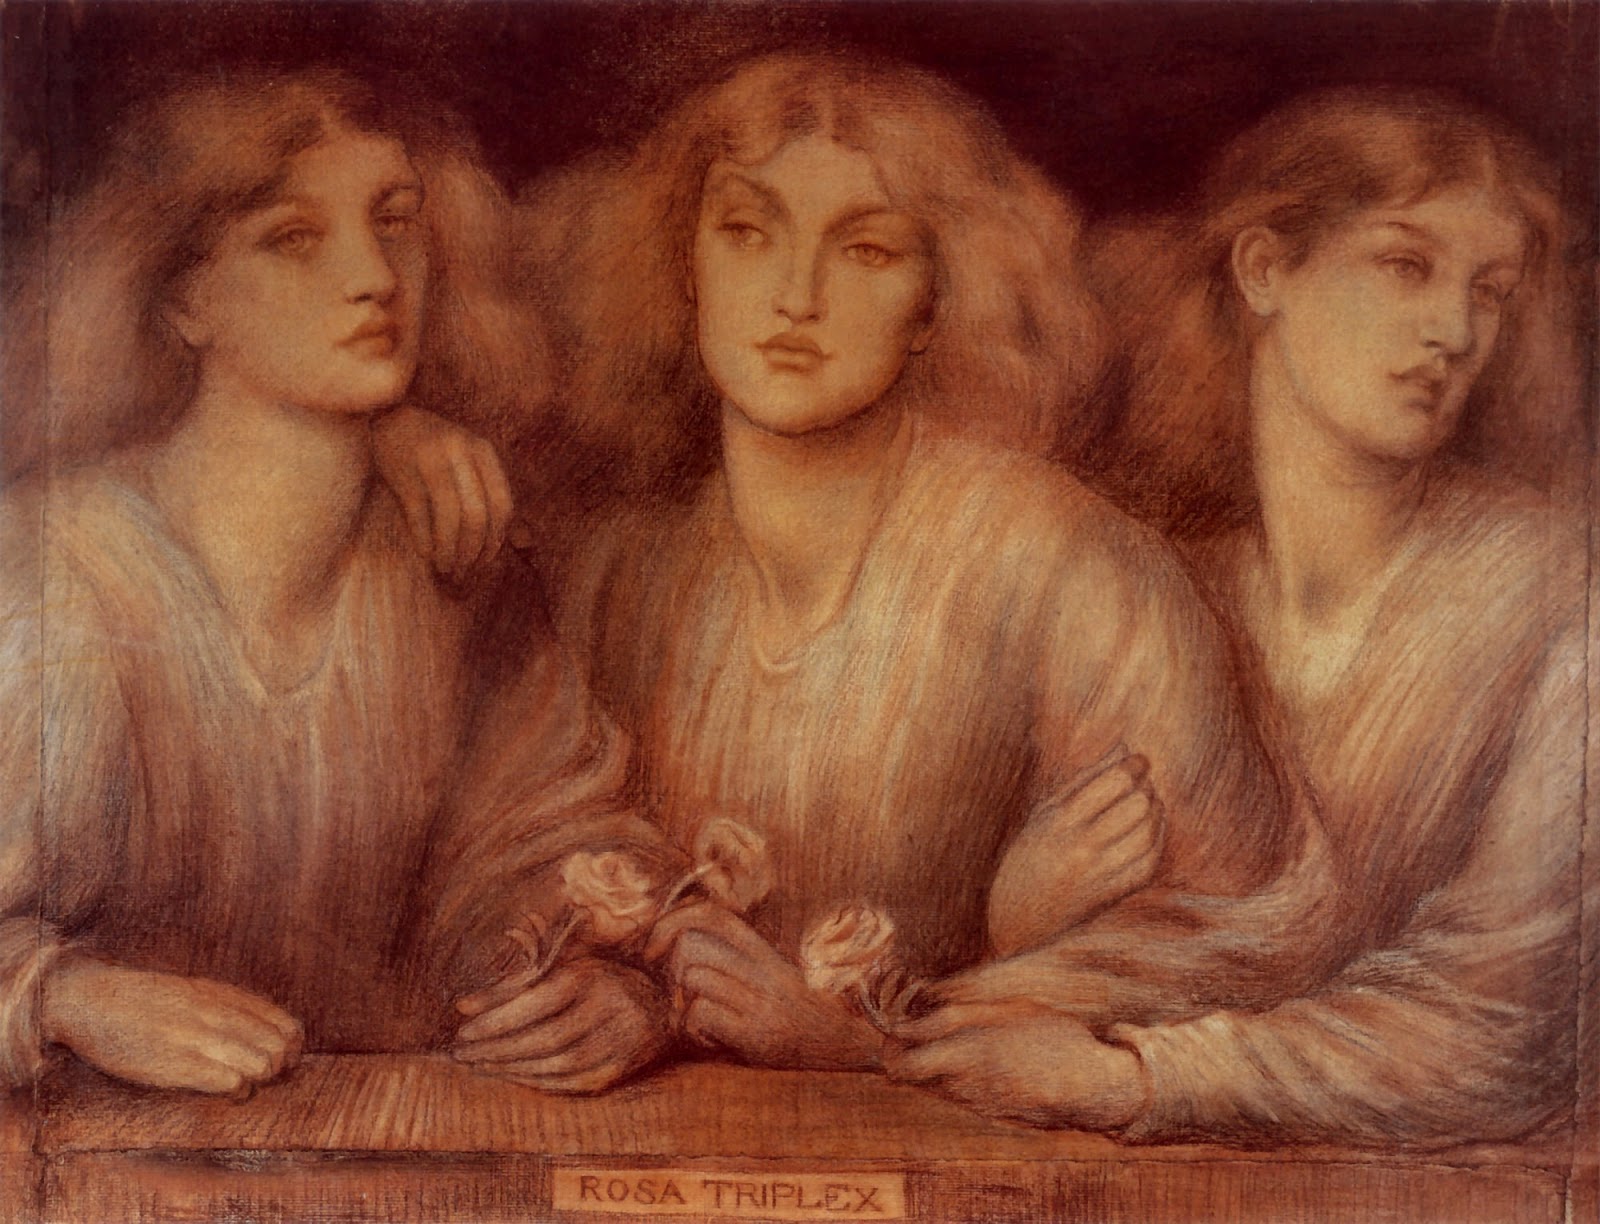 Dante+Gabriel+Rossetti-1828-1882 (139).jpg